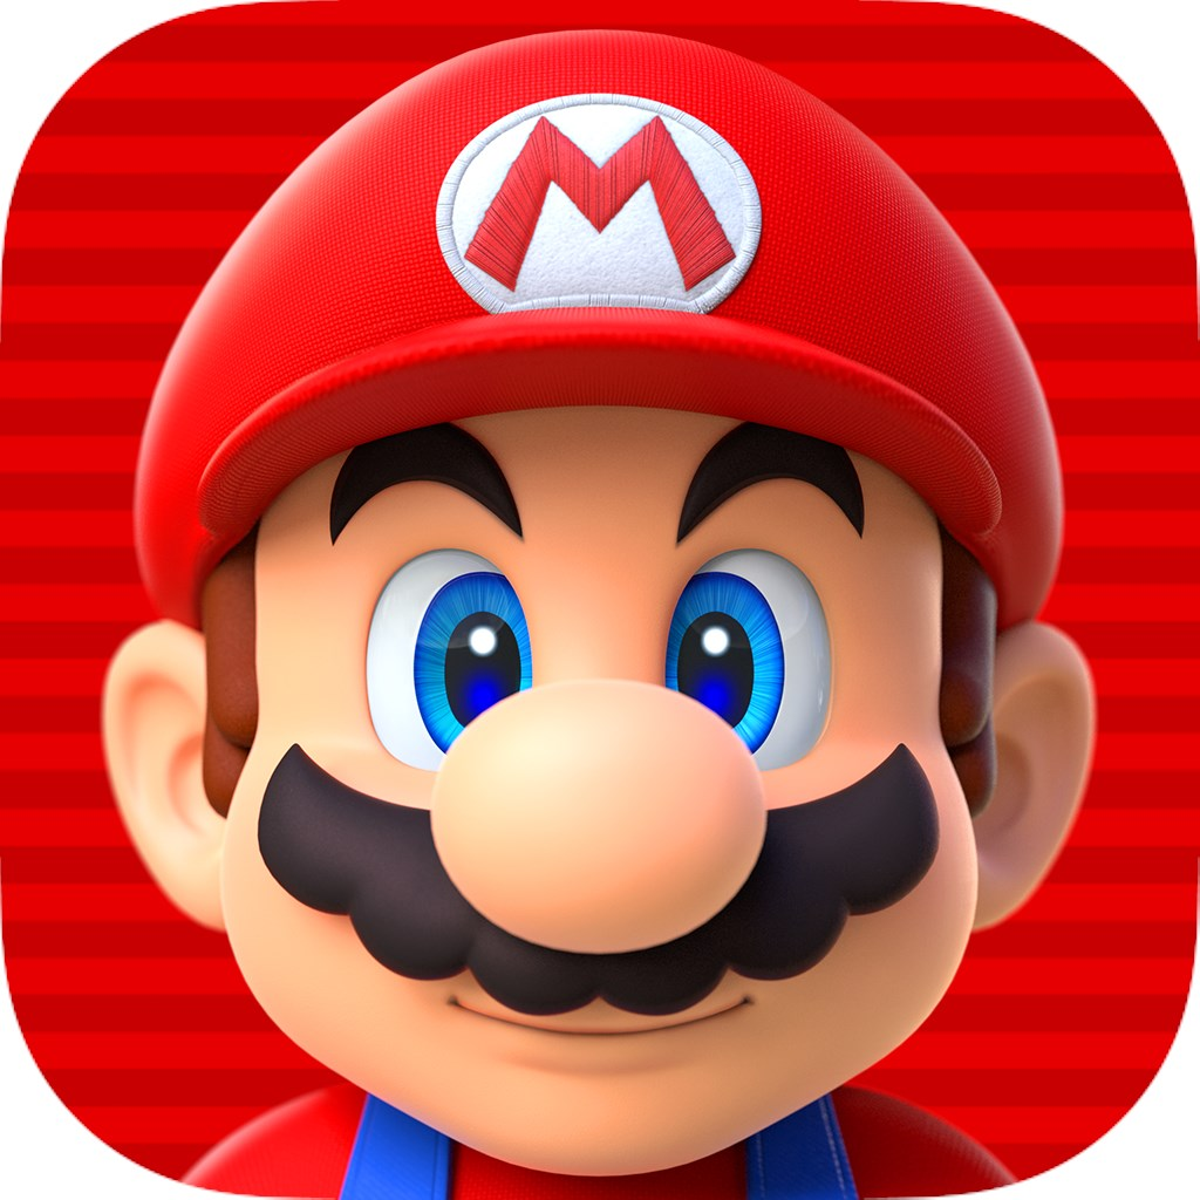 Super Mario Run' comes to the iOS App Store in December